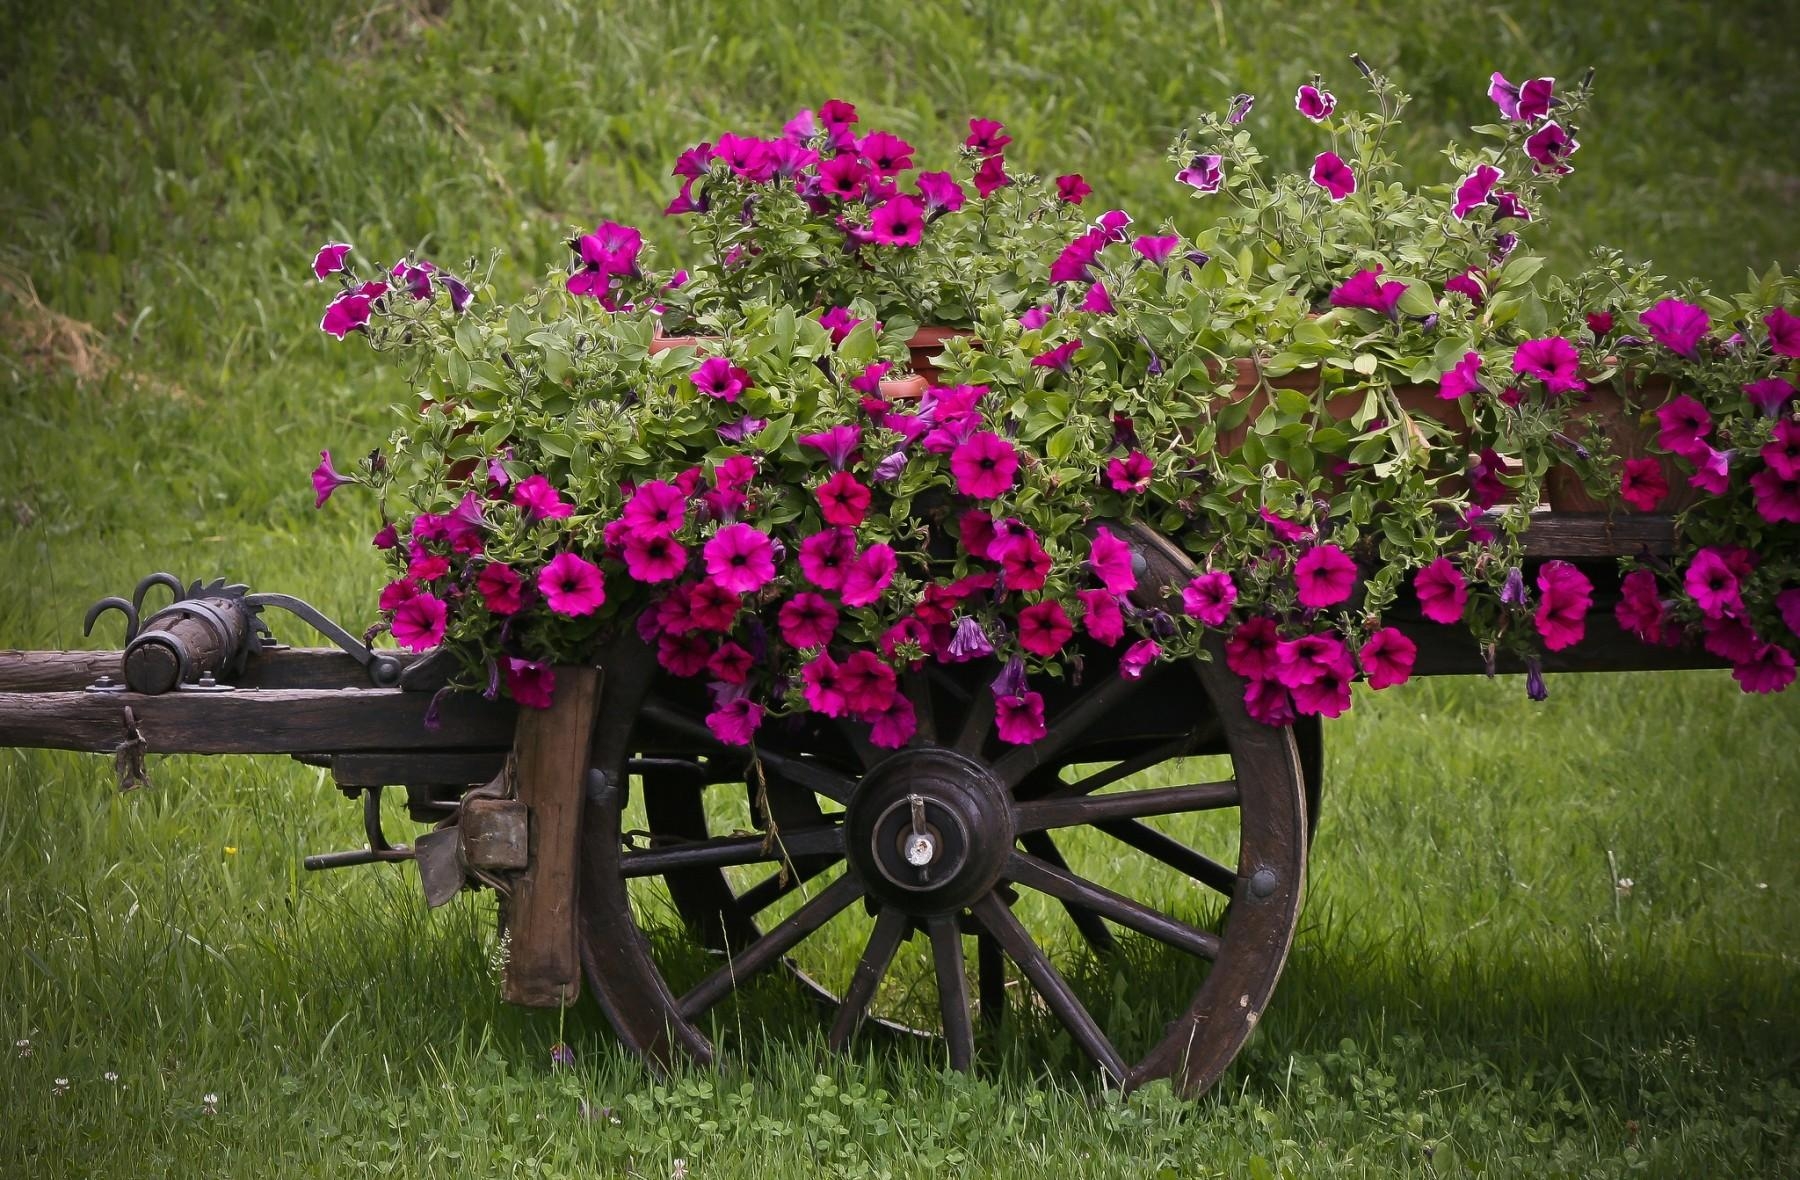 flowers, grass, handsomely, it's beautiful, pots, plant pot, cart, petunia